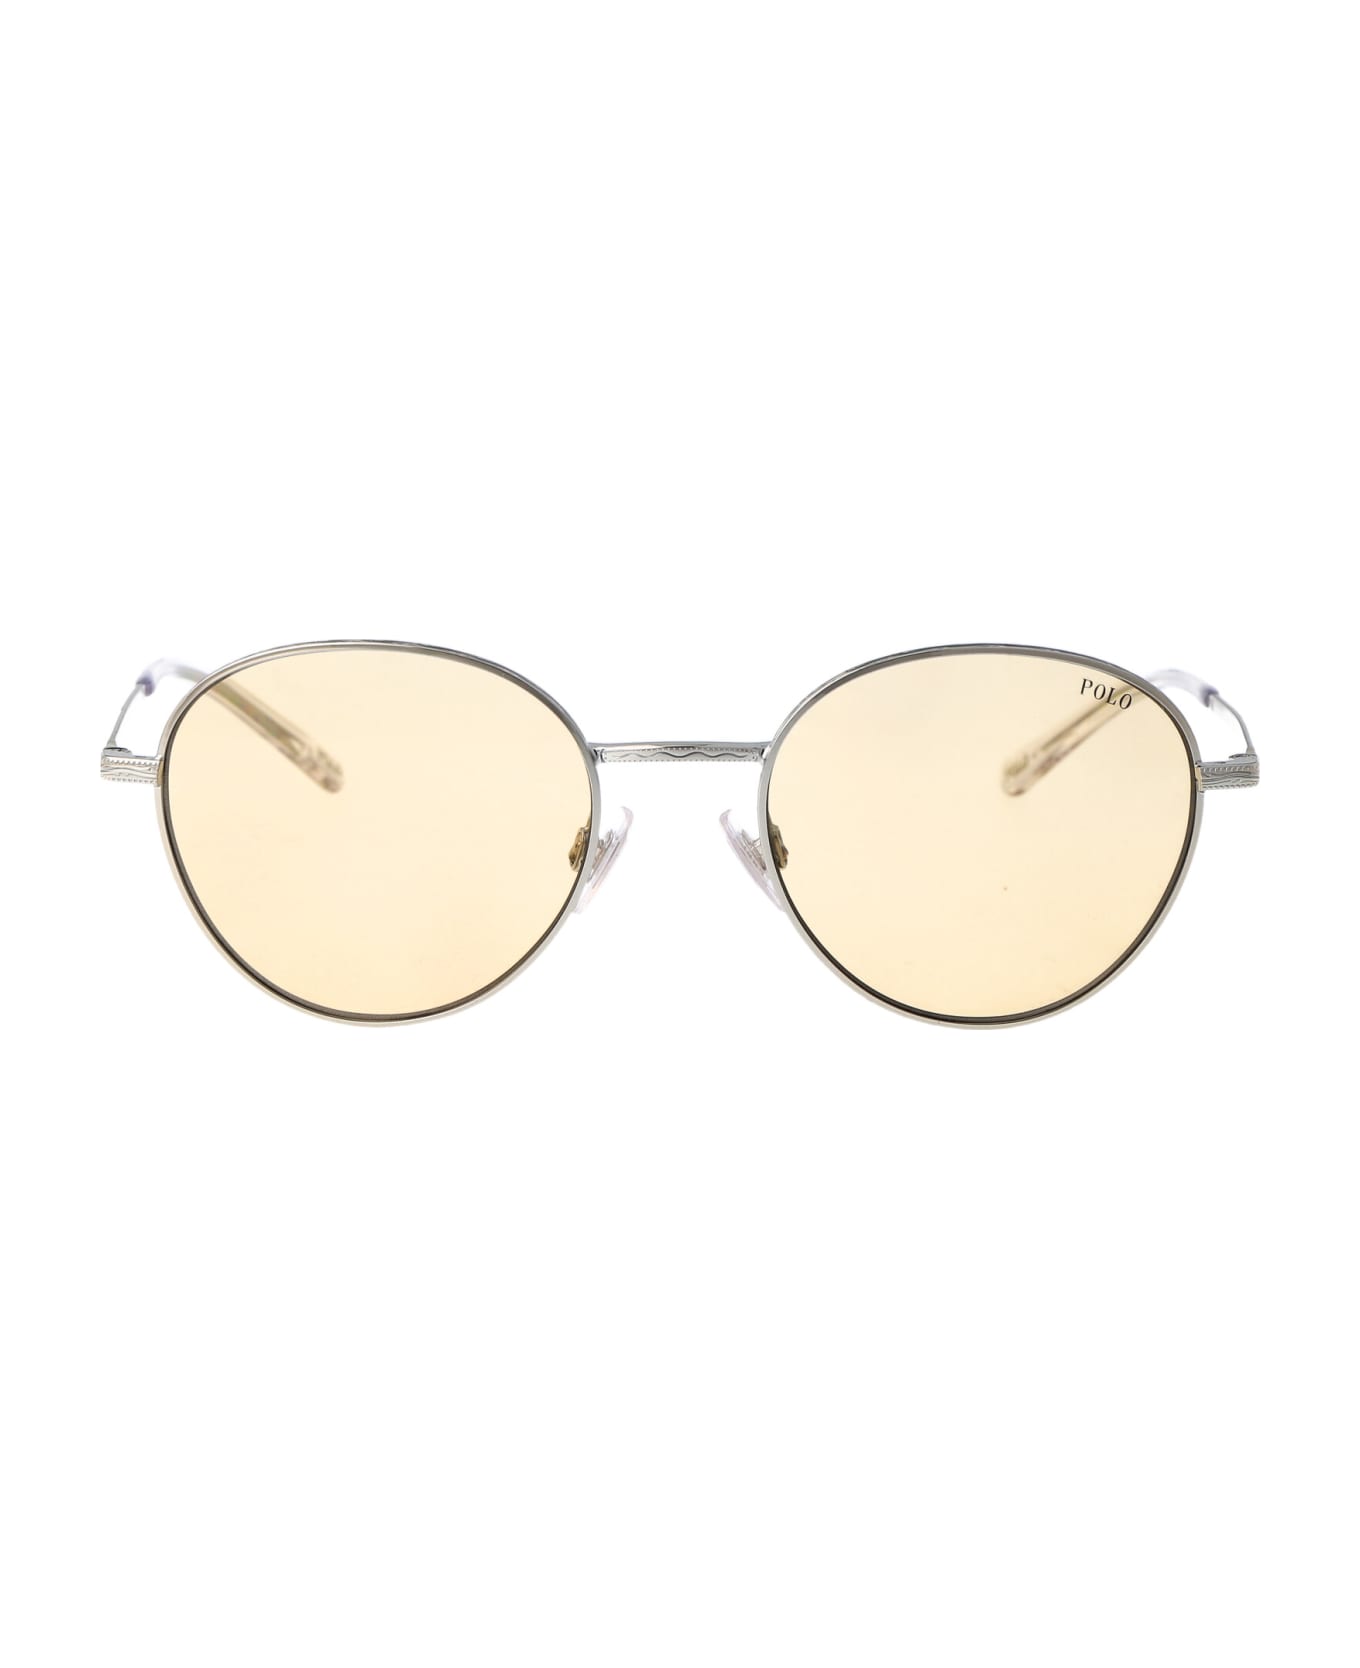 Polo Ralph Lauren 0ph3144 Sunglasses - 9001/8 Shiny Silver サングラス